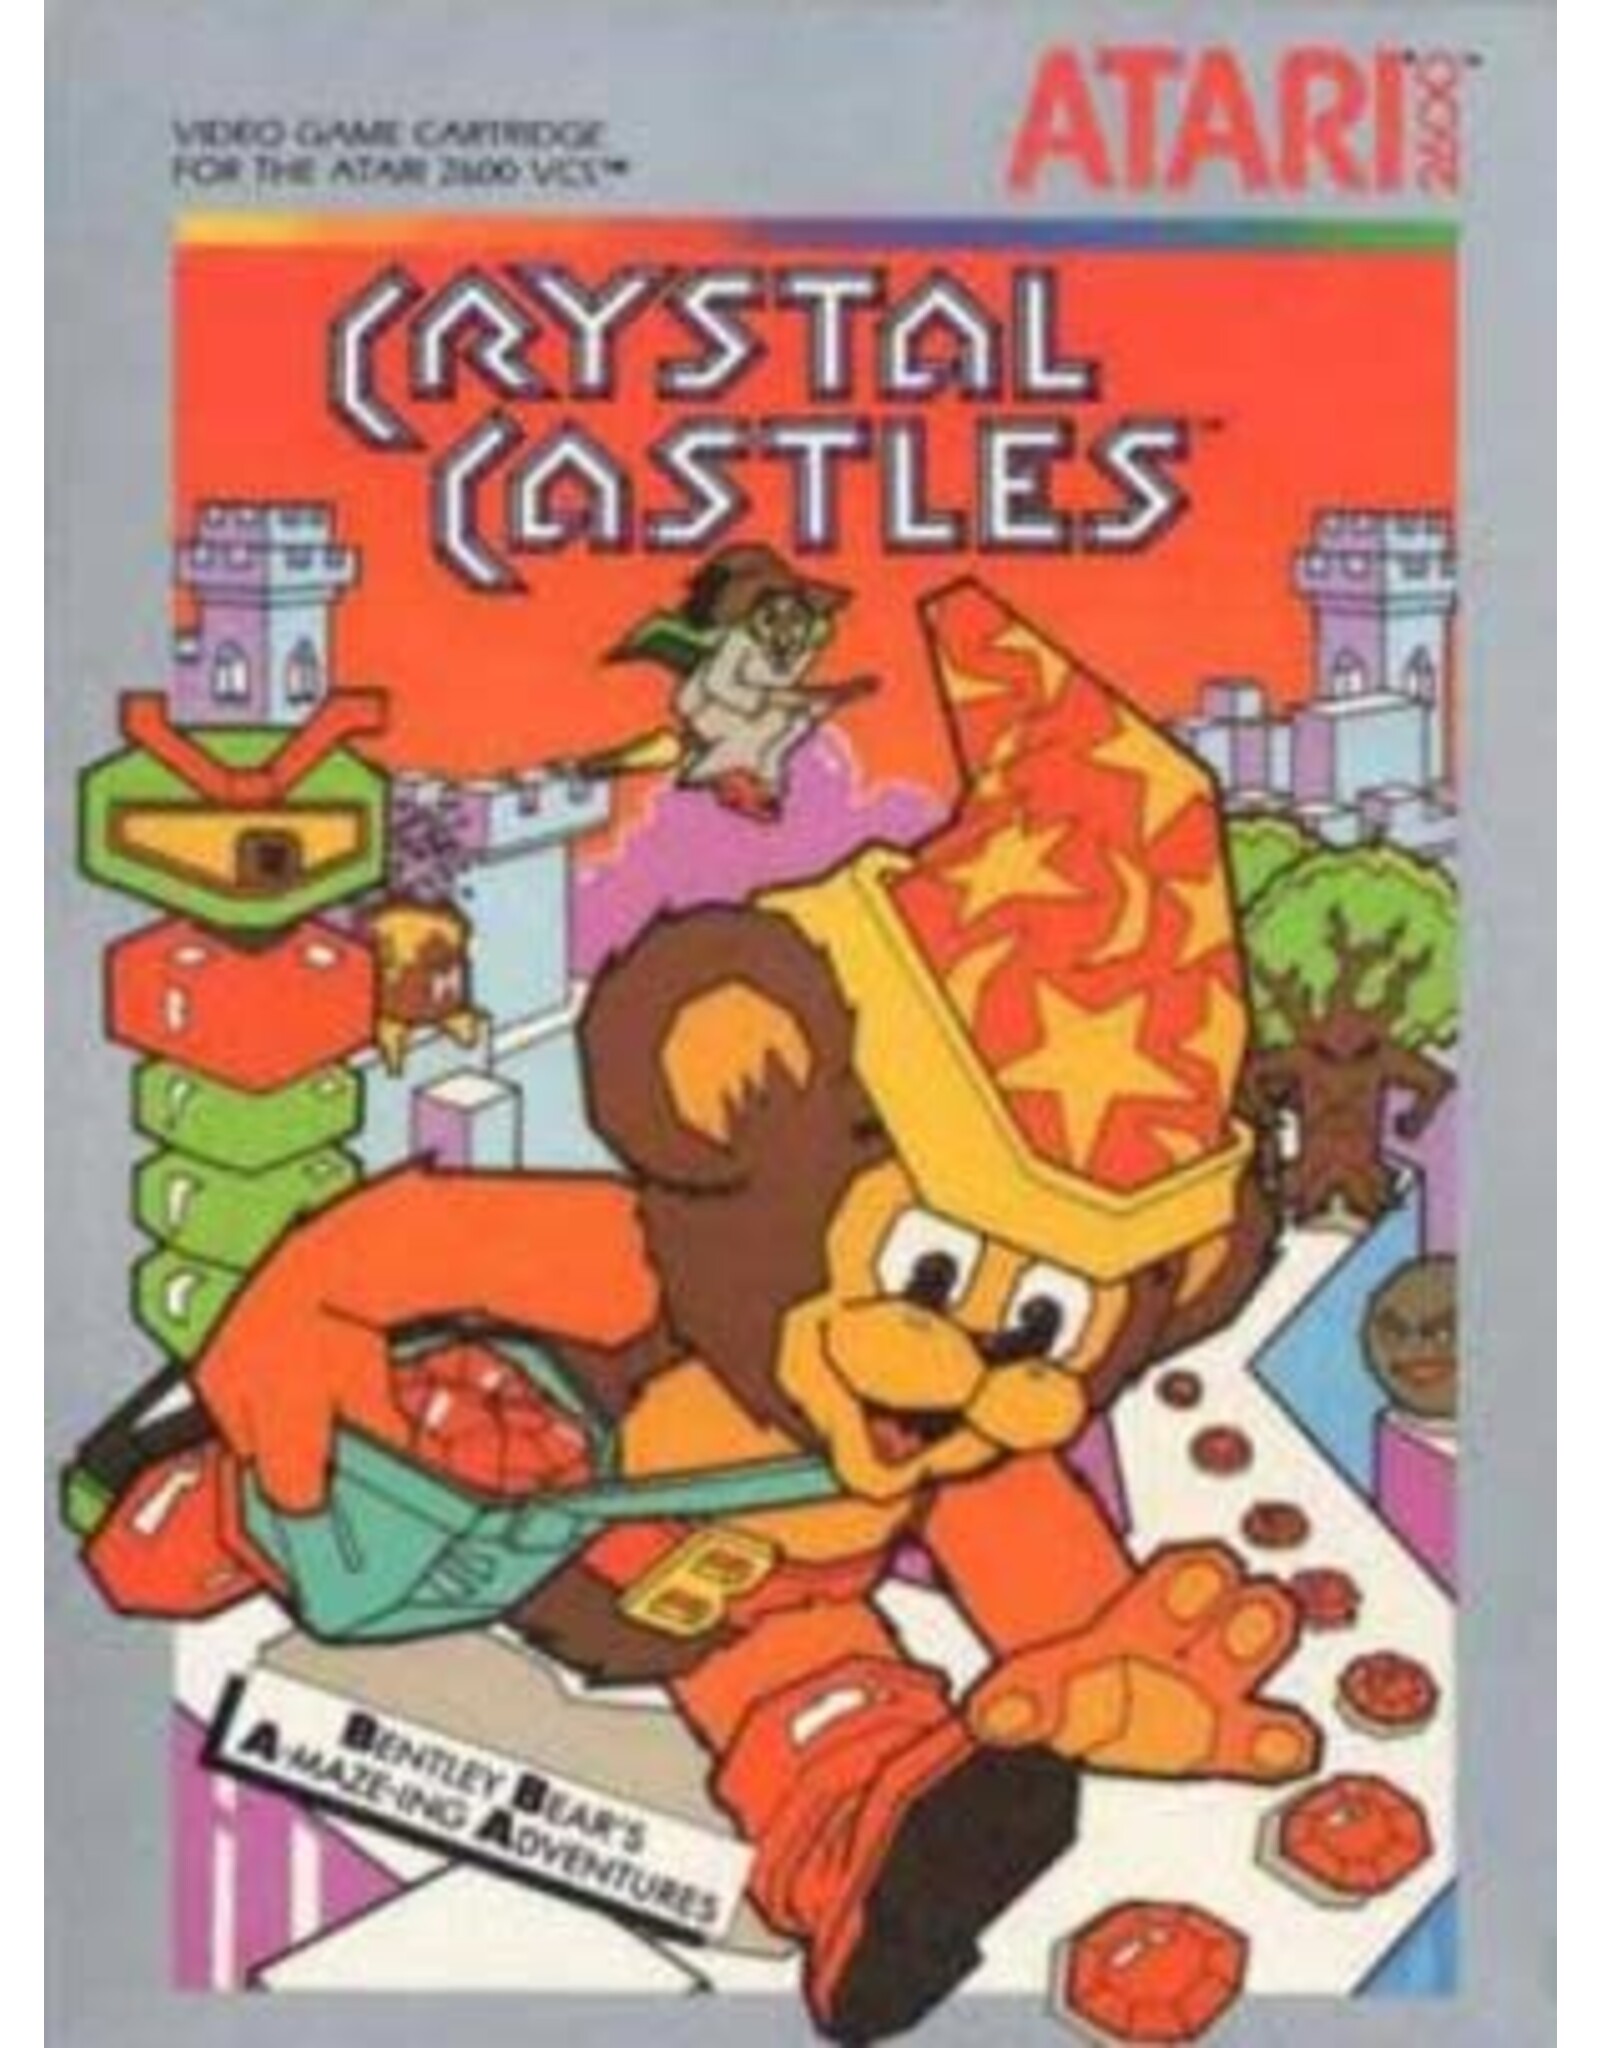 Atari 2600 Crystal Castles (Cart Only)